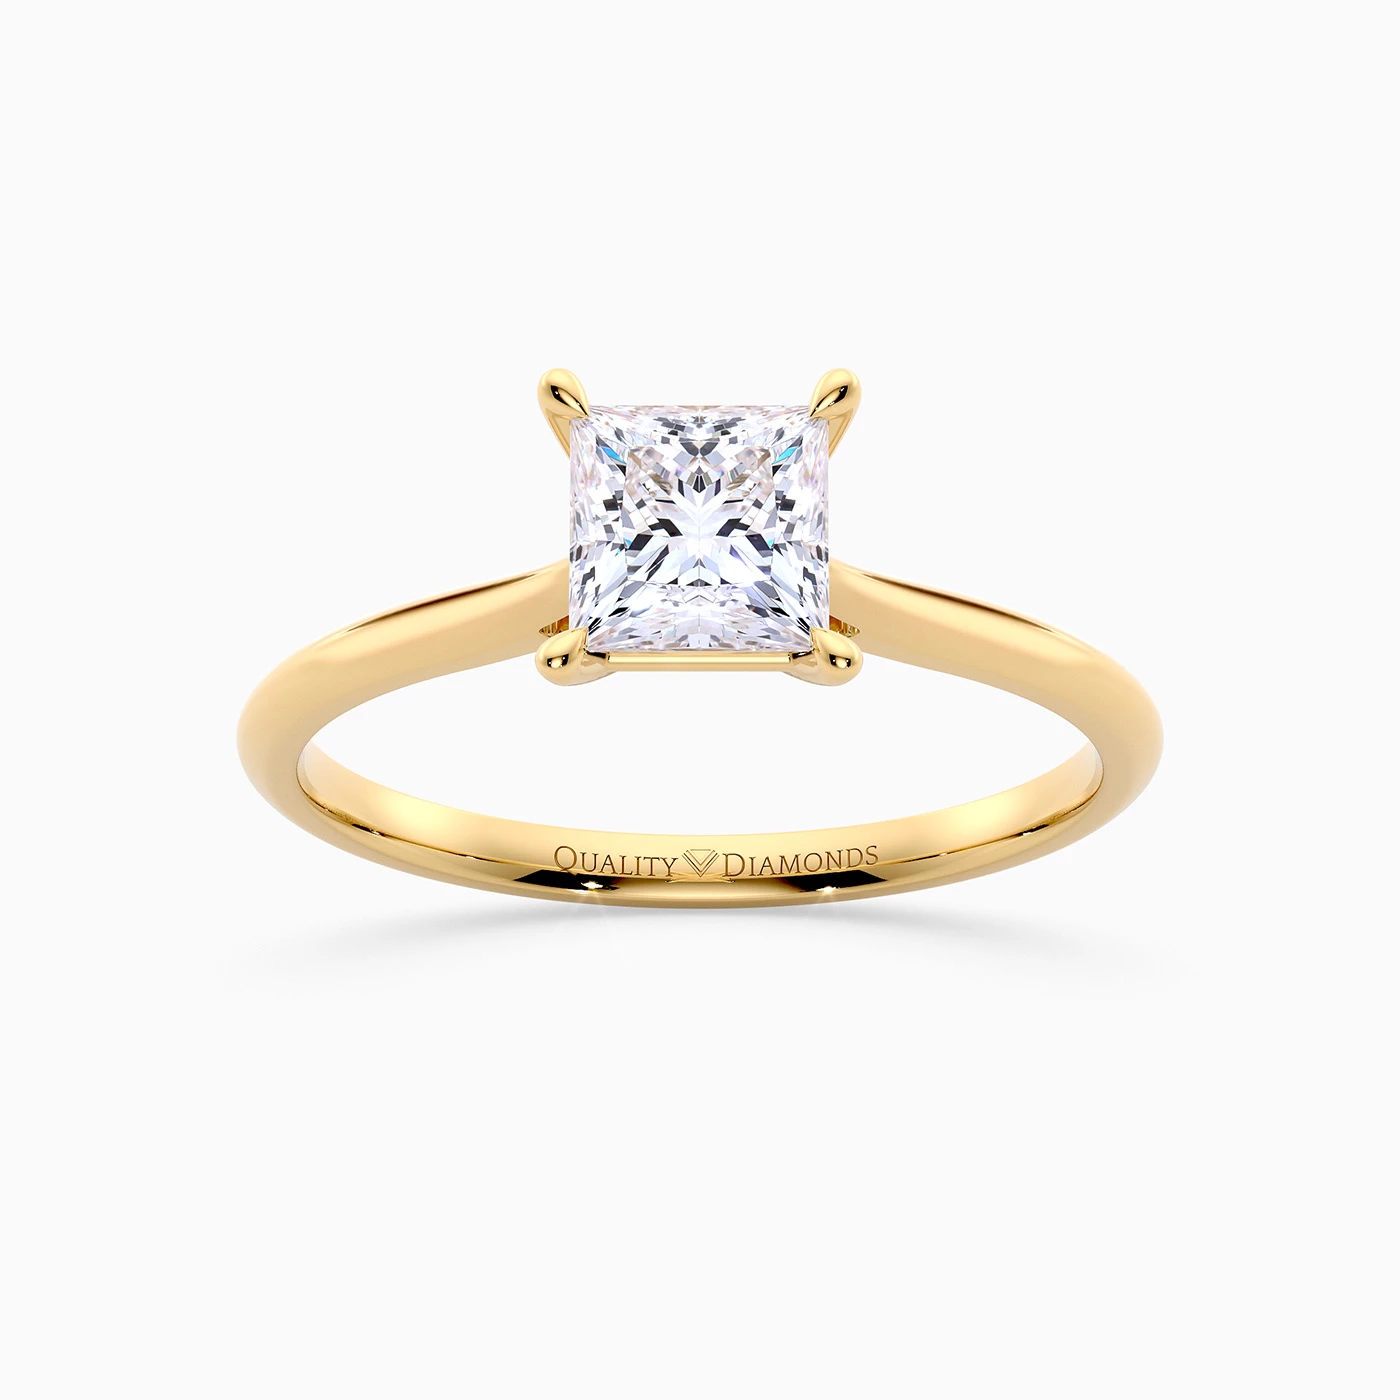 Princess Carys Diamond Ring in 9K Yellow Gold